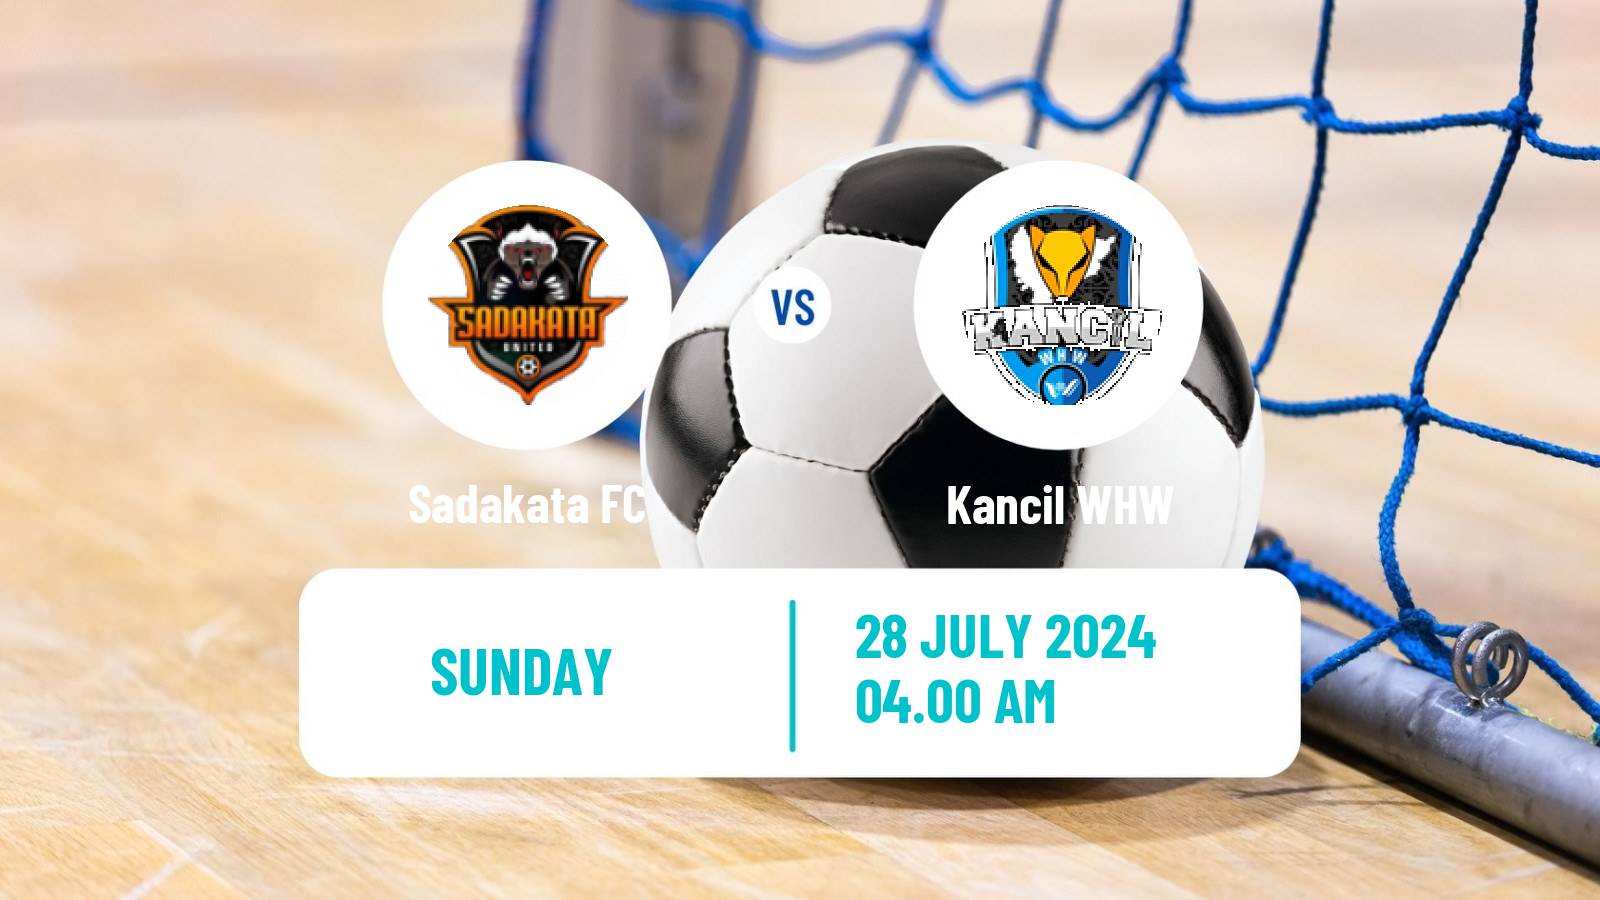 Futsal Indonesian Pro Futsal League Sadakata - Kancil WHW